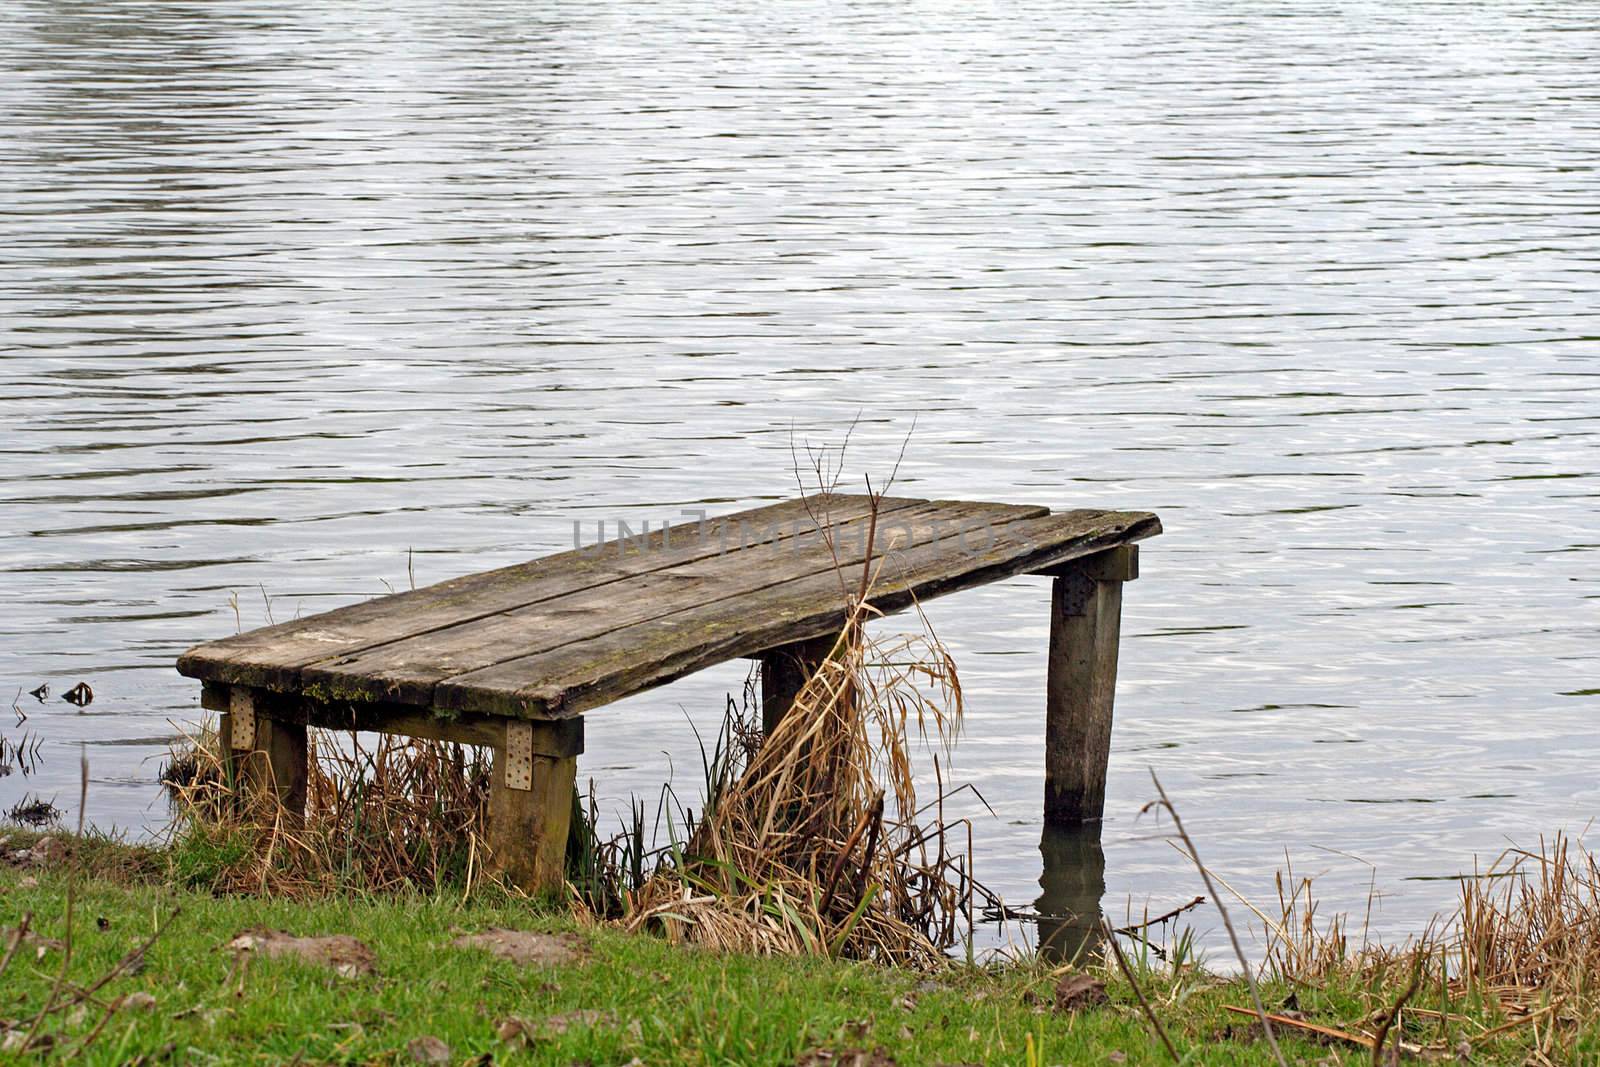 A small pier at the bank of a lake